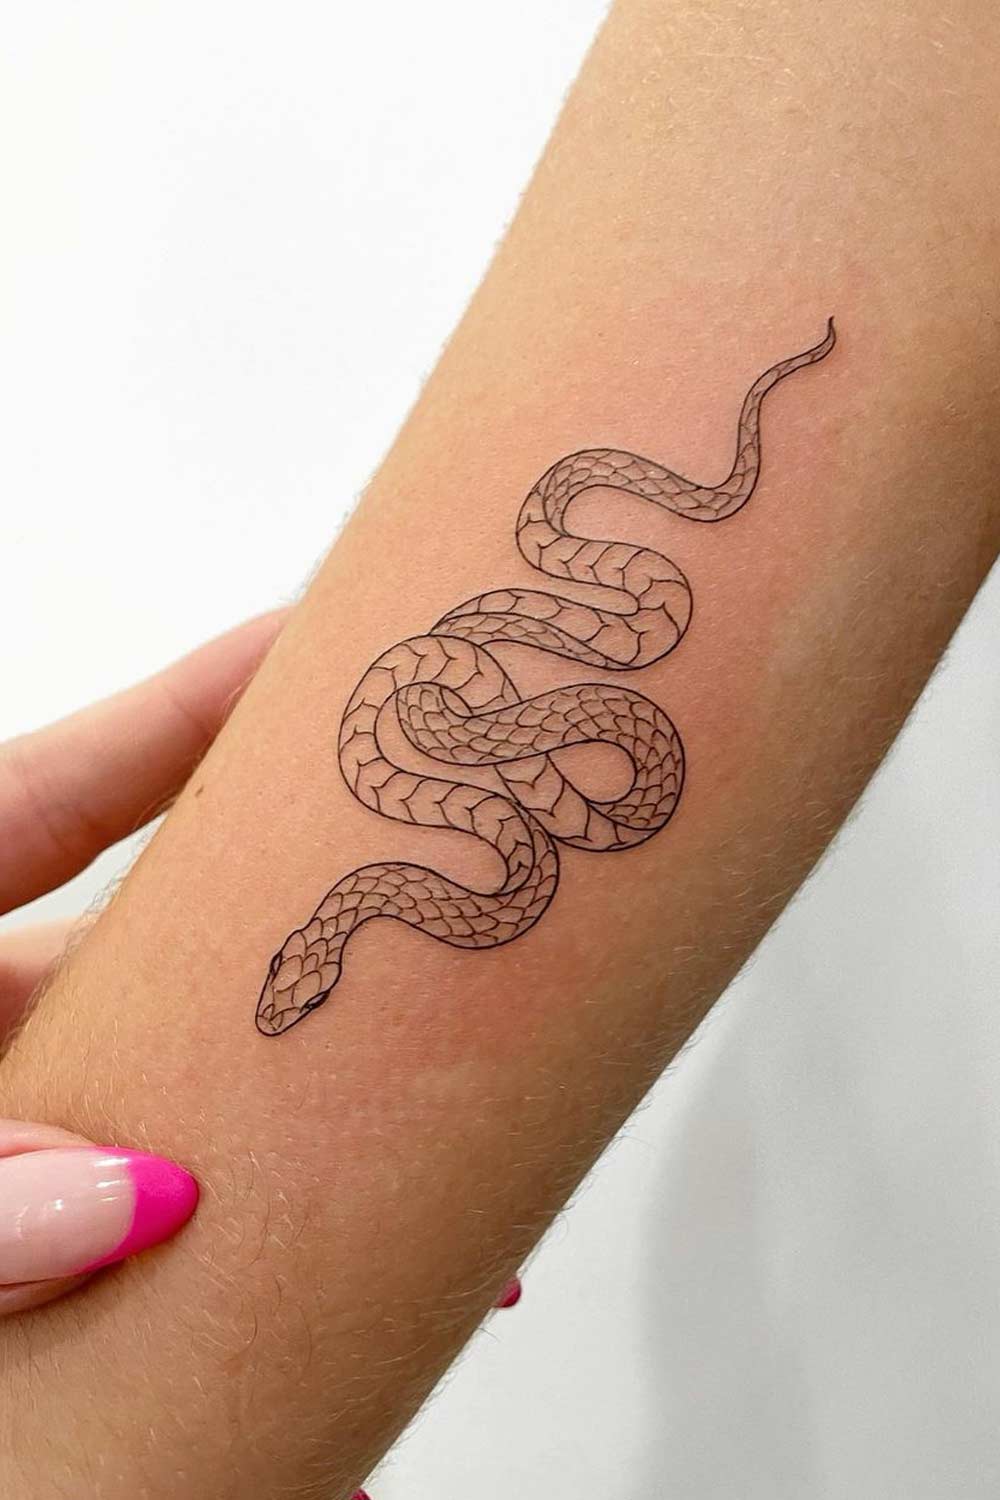 Simple Snake Tattoo Design